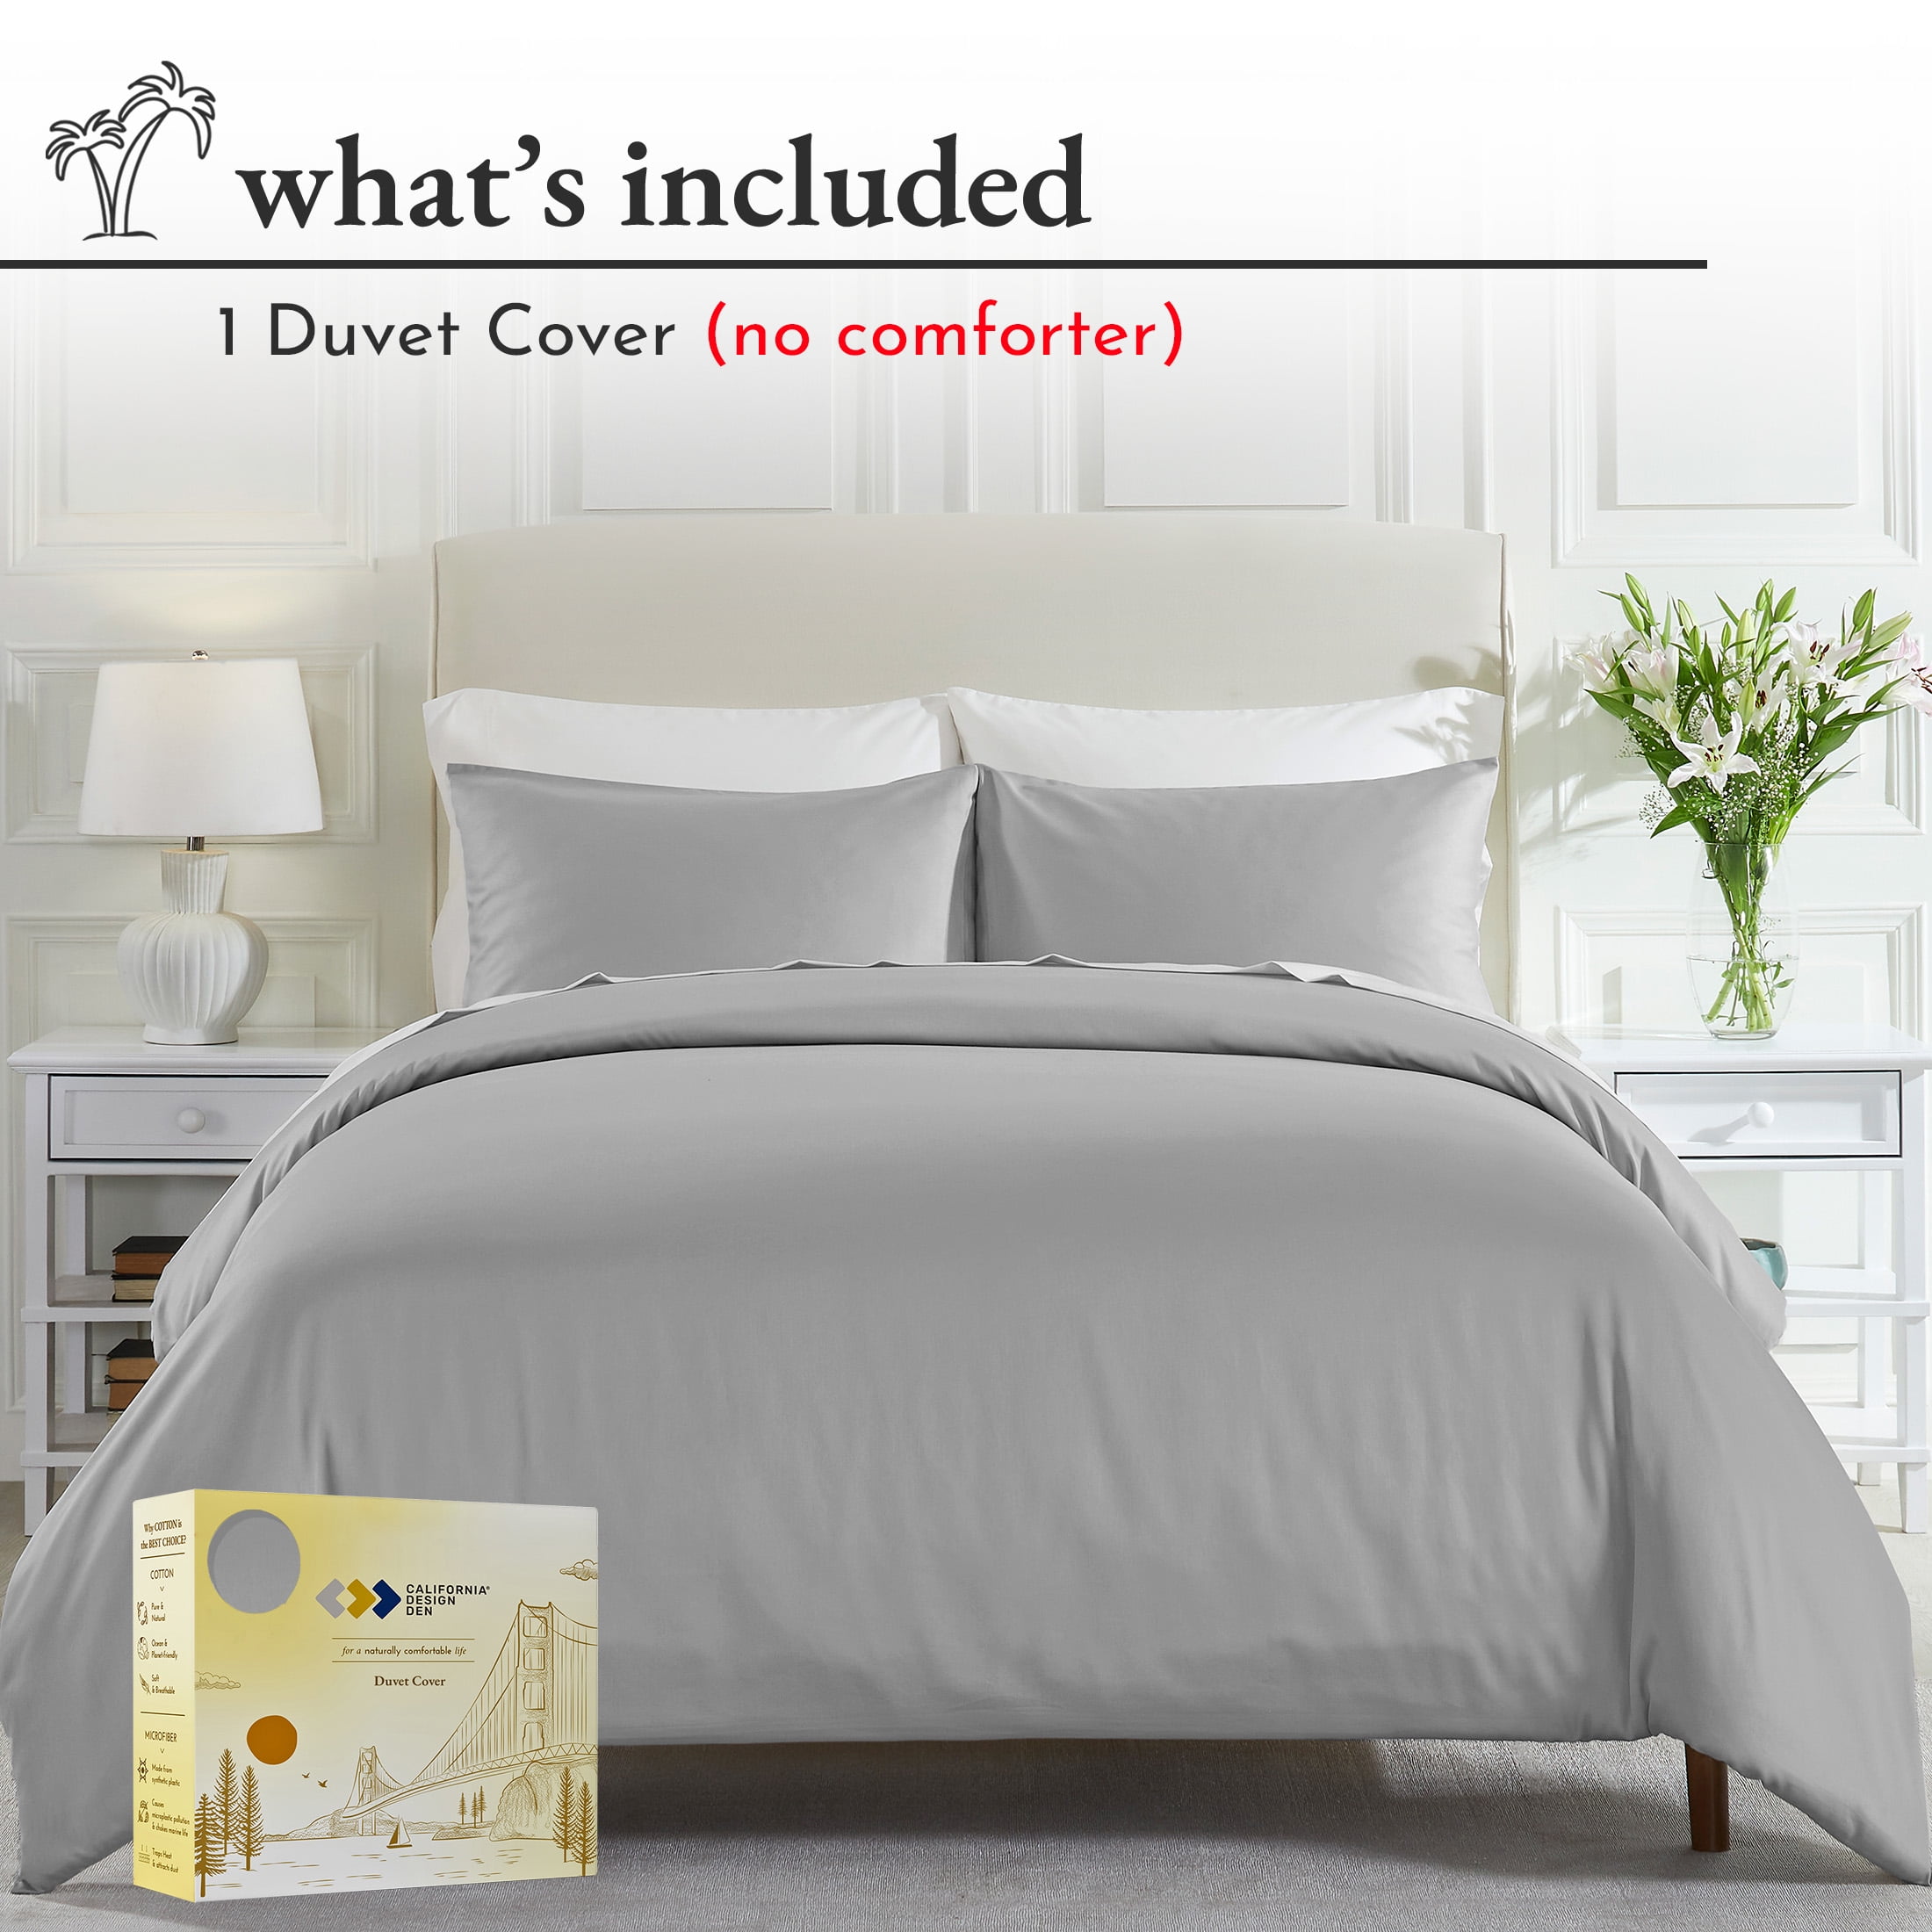 King Size Duvet Cover Bed Set Luxury bed sheet comforter set soft custom  print duvet cover king size.. Duvet Cover Size 100x90 Two Pillowcasees Size  for Sale in Orlando, FL - OfferUp